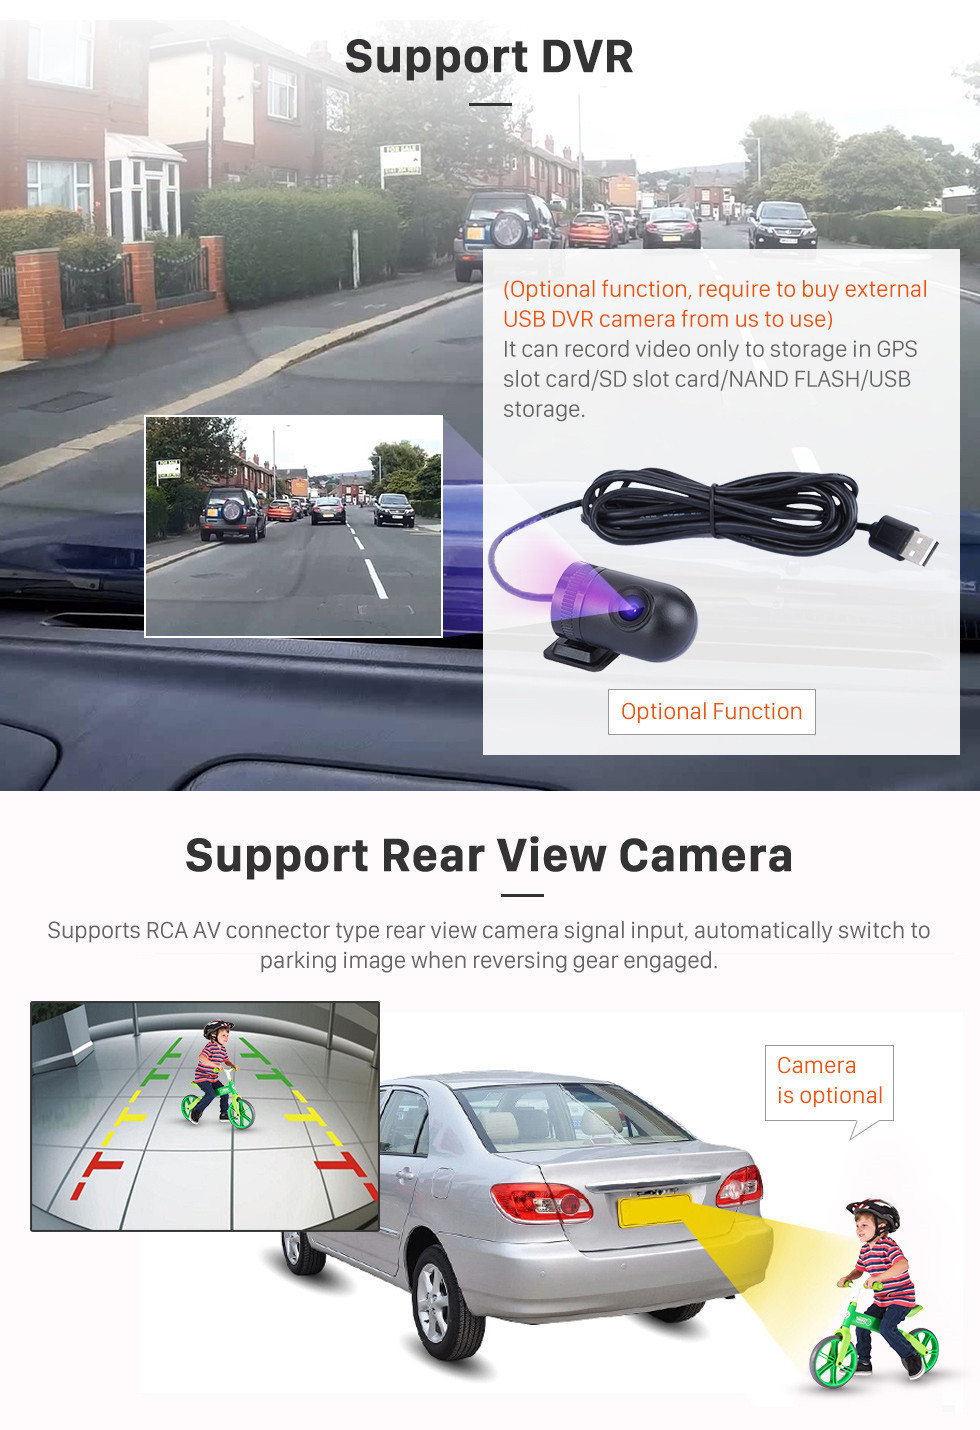 Seicane Pantalla táctil HD 2019 Tata Tiago / Nexon Android 11.0 9 pulgadas Navegación GPS Radio Bluetooth AUX Carplay compatible Cámara trasera DAB + OBD2